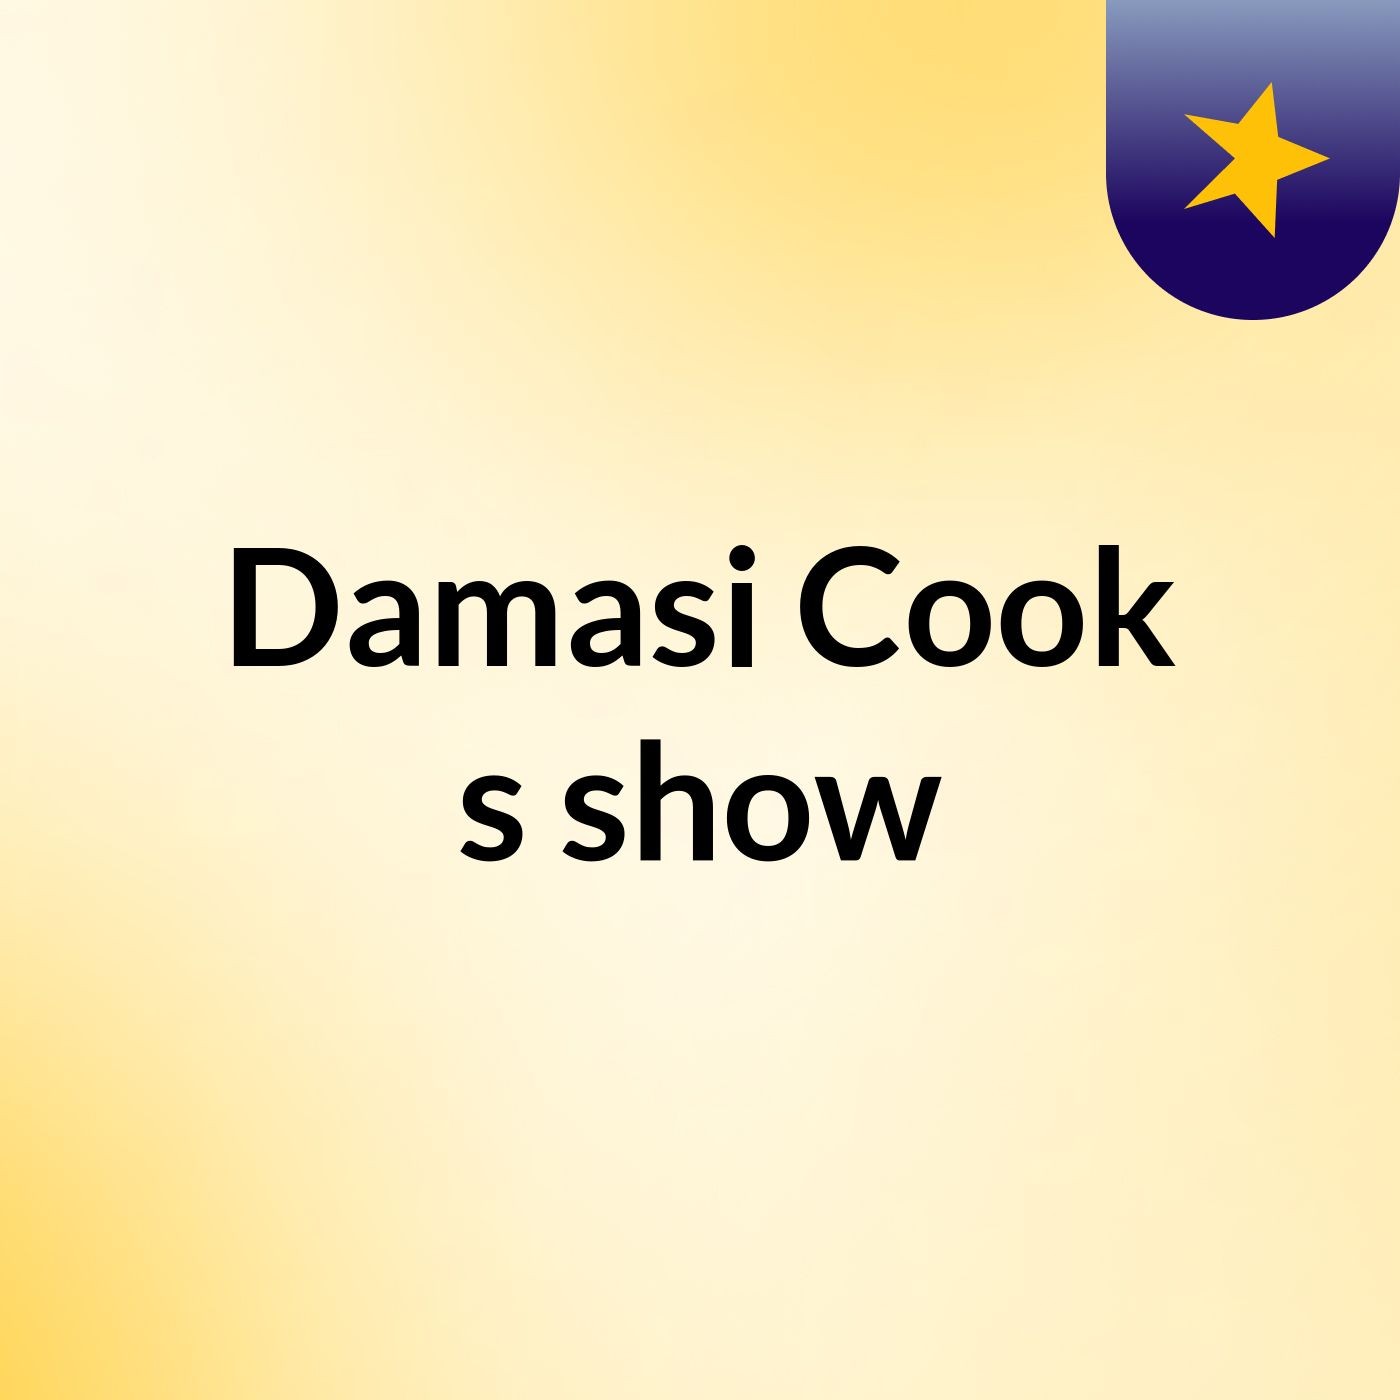 Episode 11 - Damasi Cook's show